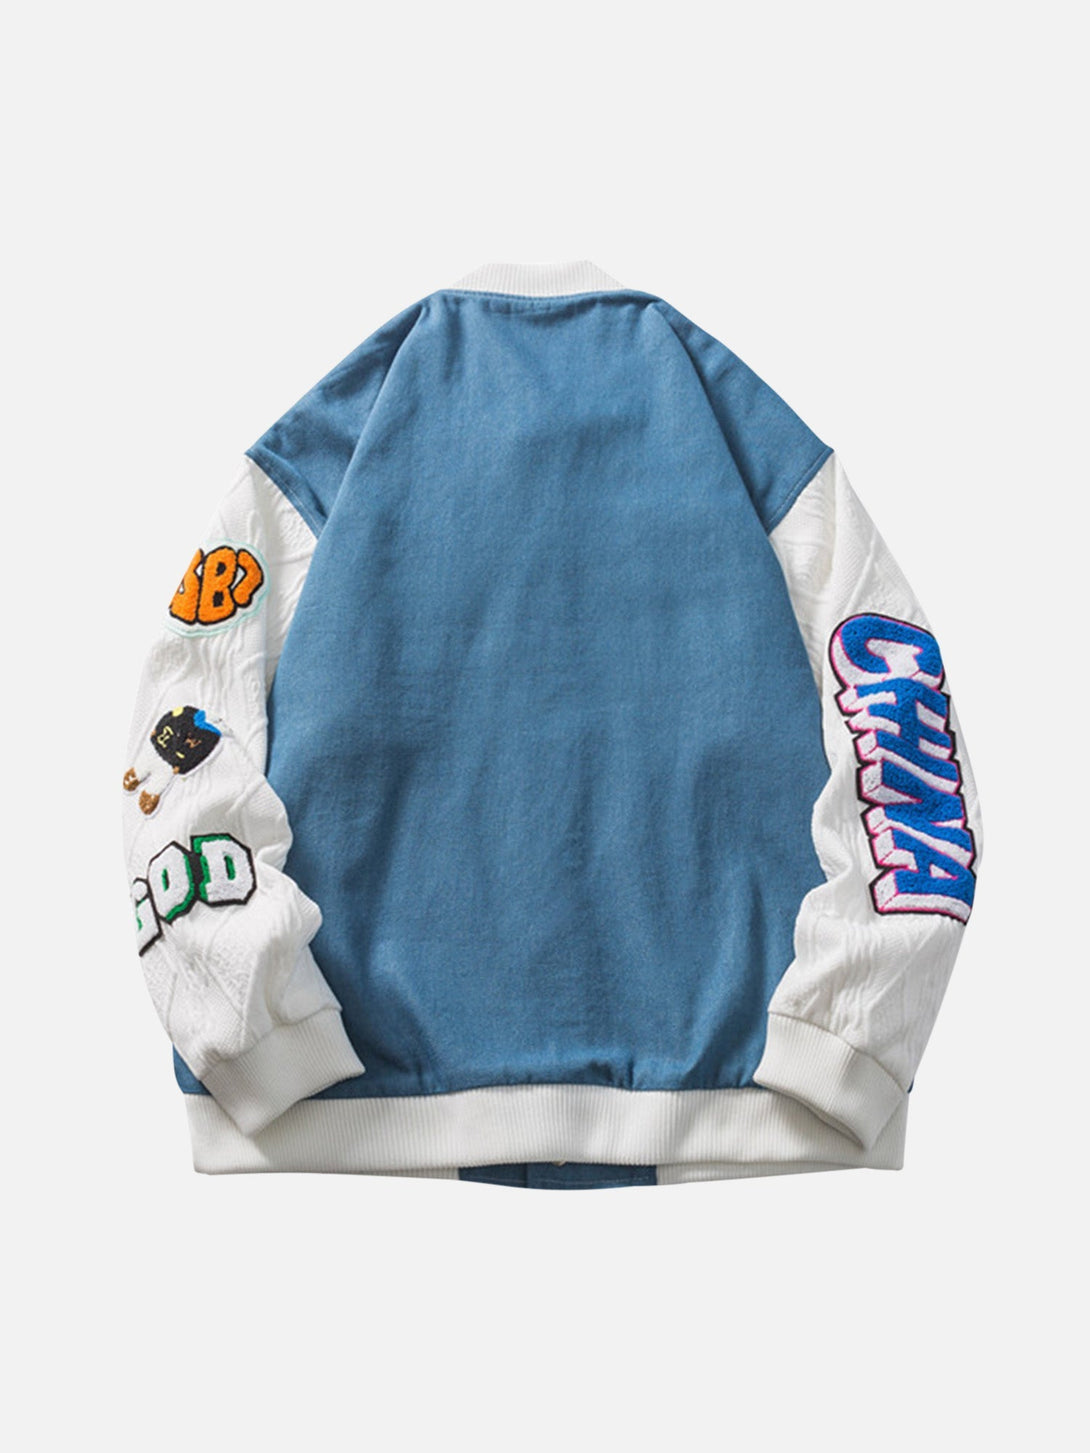 Majesda® - Patch Embroidered Denim Patchwork Baseball Jacket- Outfit Ideas - Streetwear Fashion - majesda.com